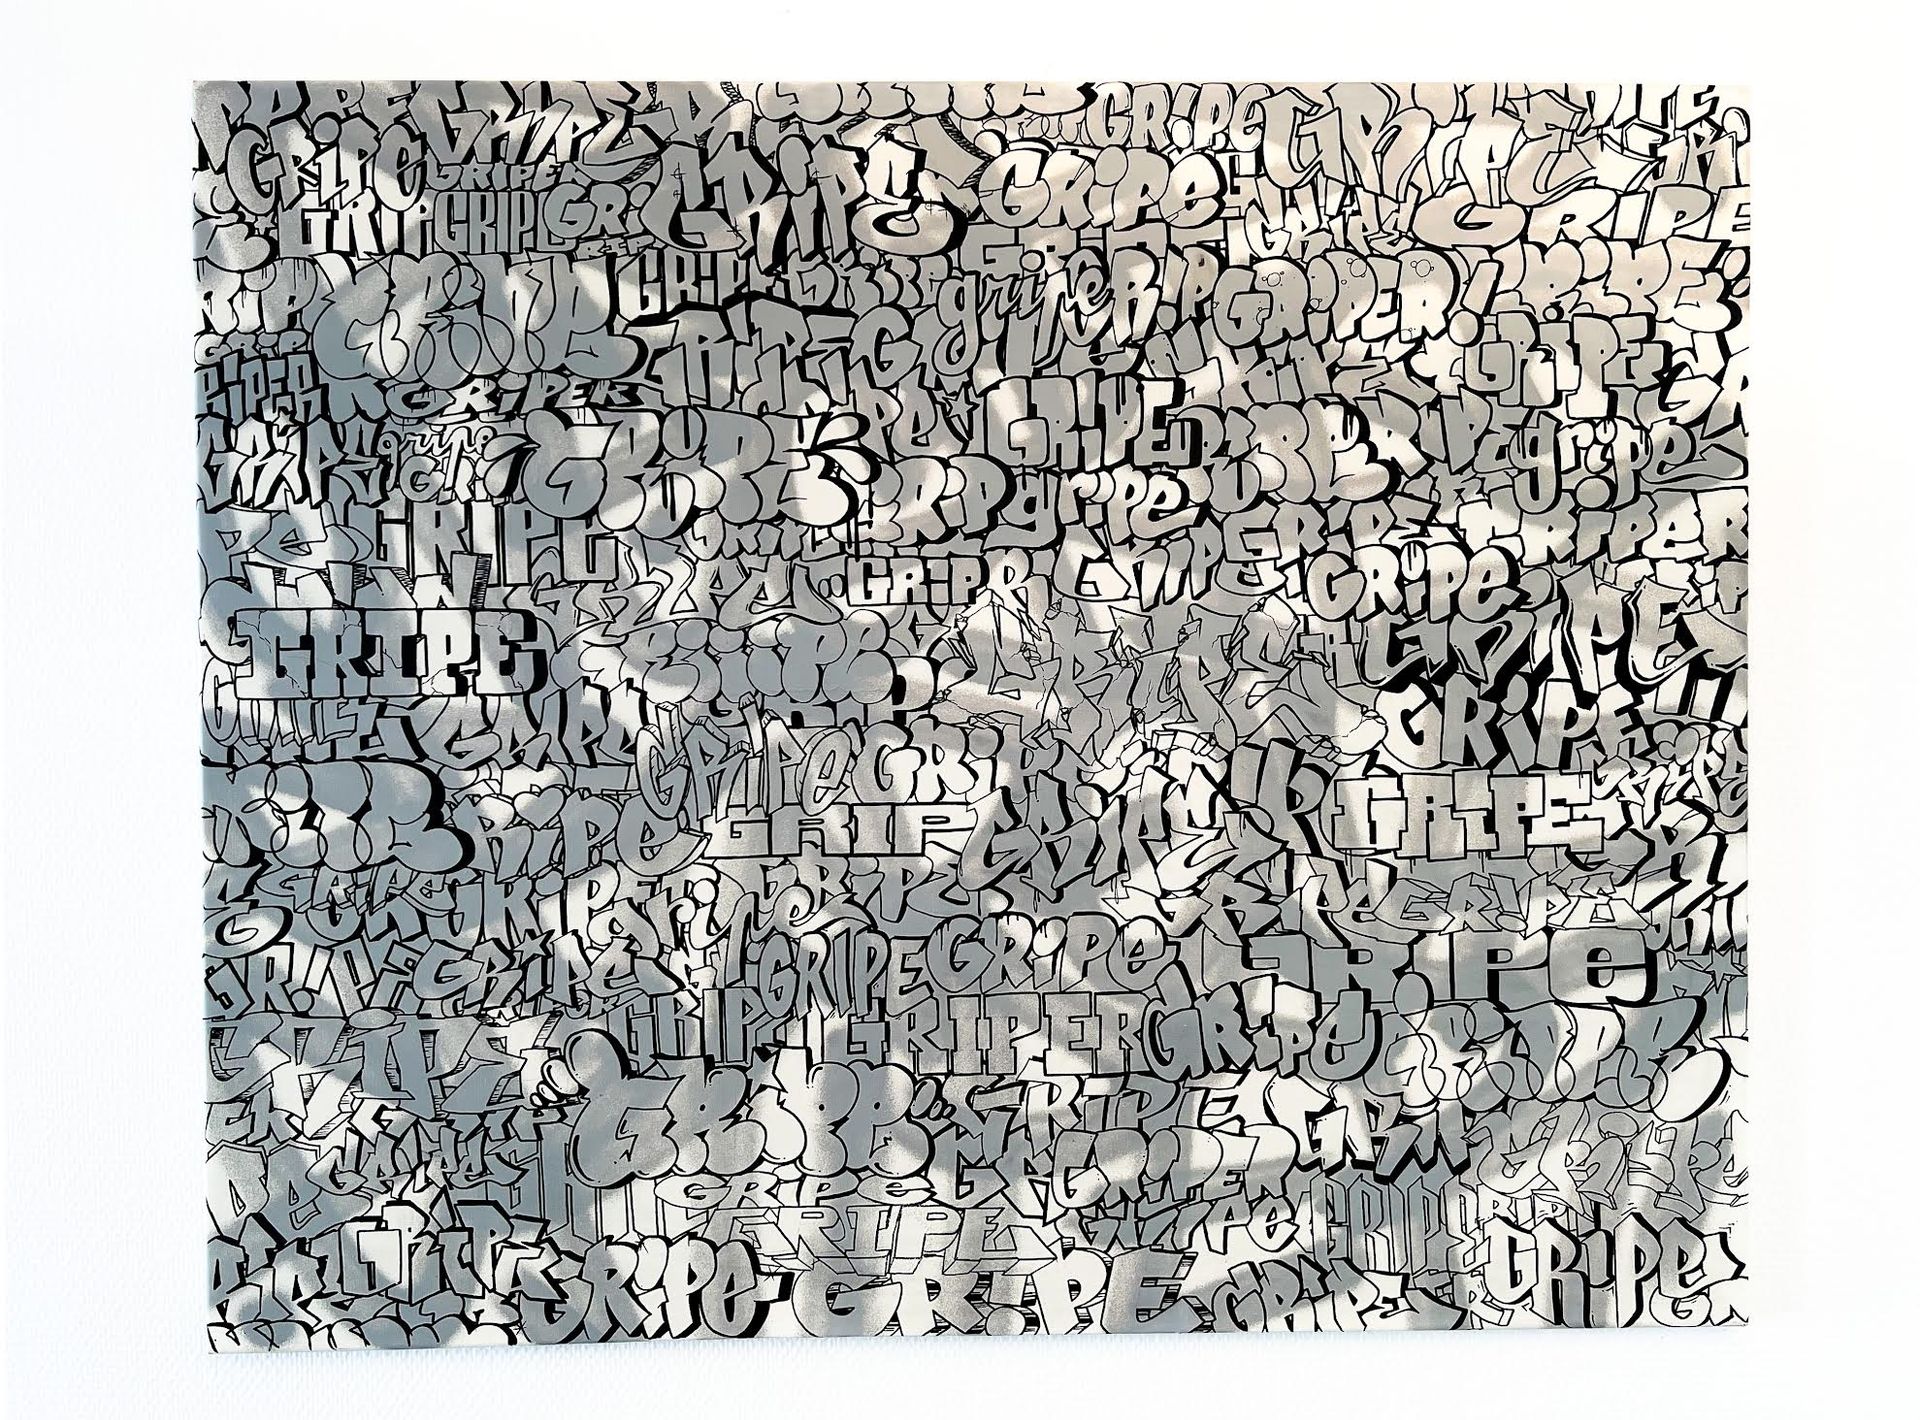 Anthony GRIP 混乱的涂鸦 , 2022年
混合媒体，气溶胶，丙烯酸，画布上的记号笔
作品安装在担架上
100 x 80厘米